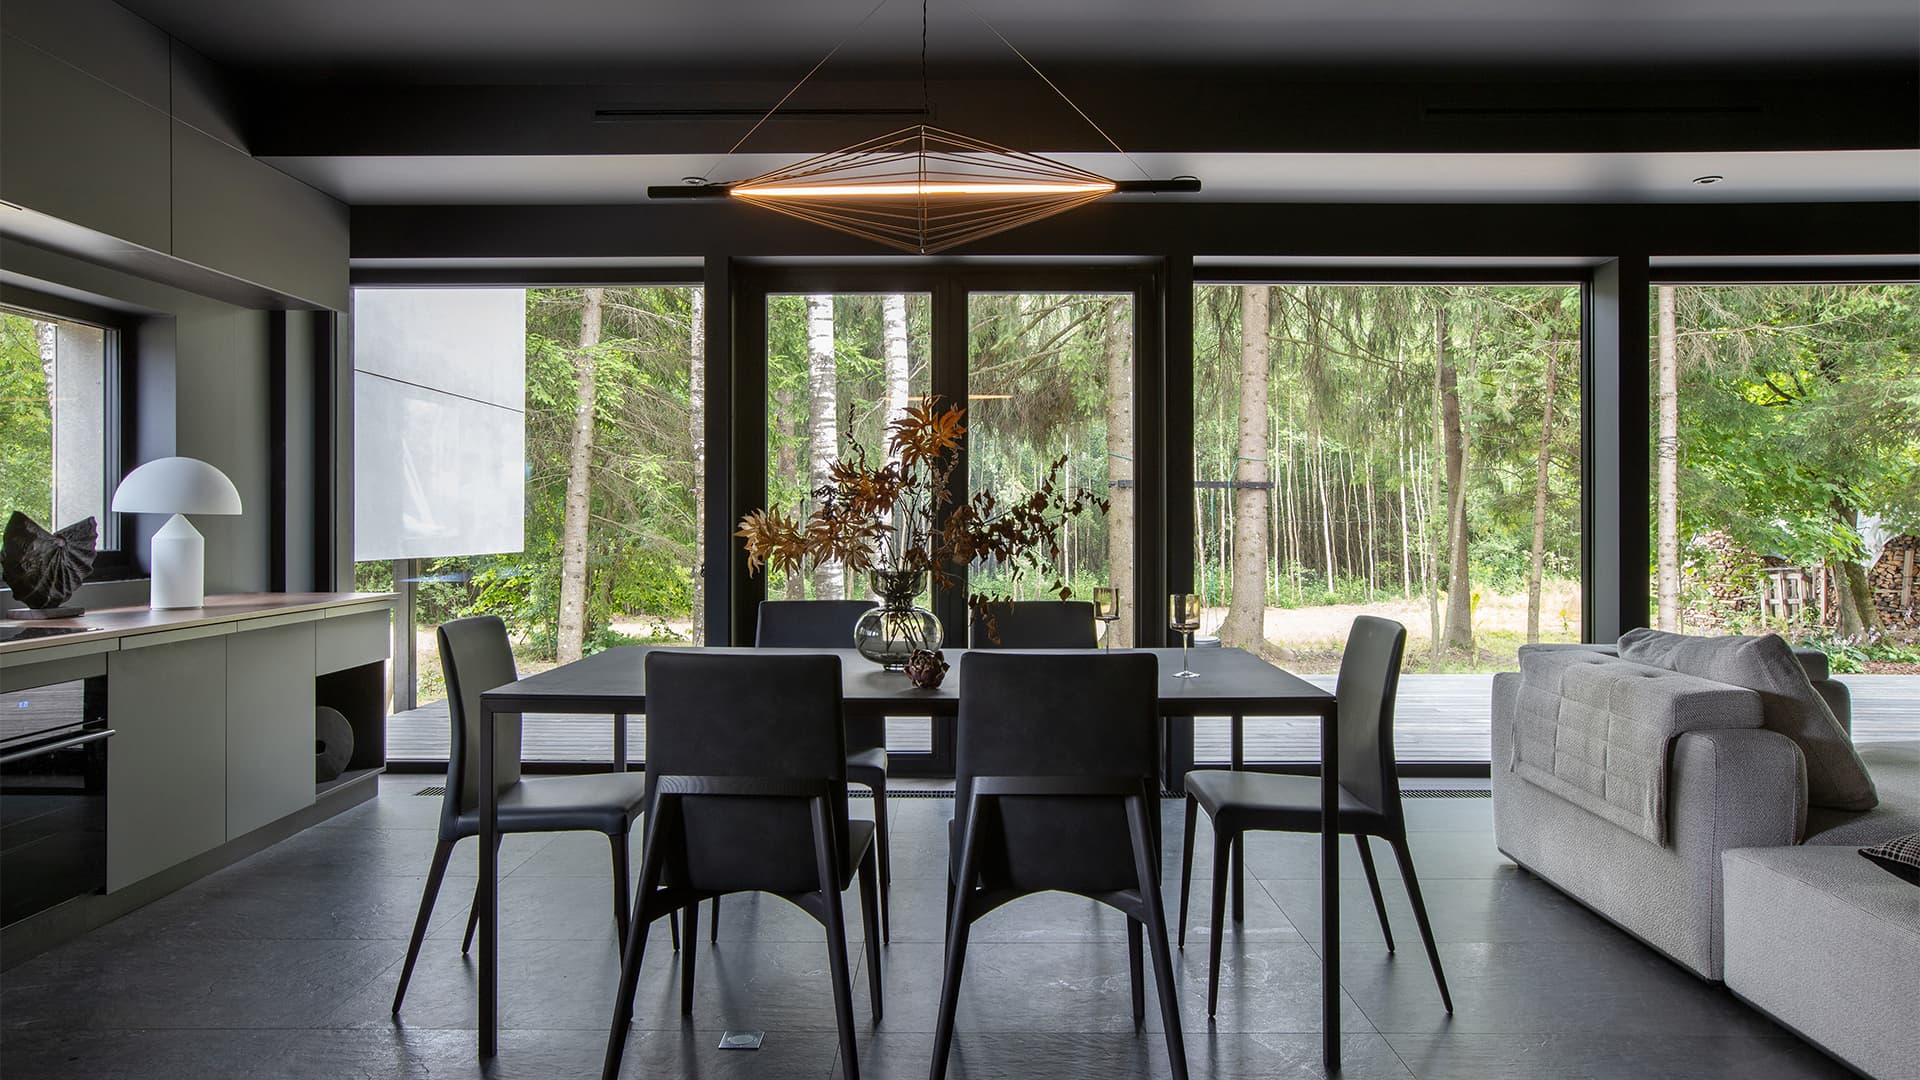 Total black интерьер для просторного загородного дома – проект ZROBIM architects